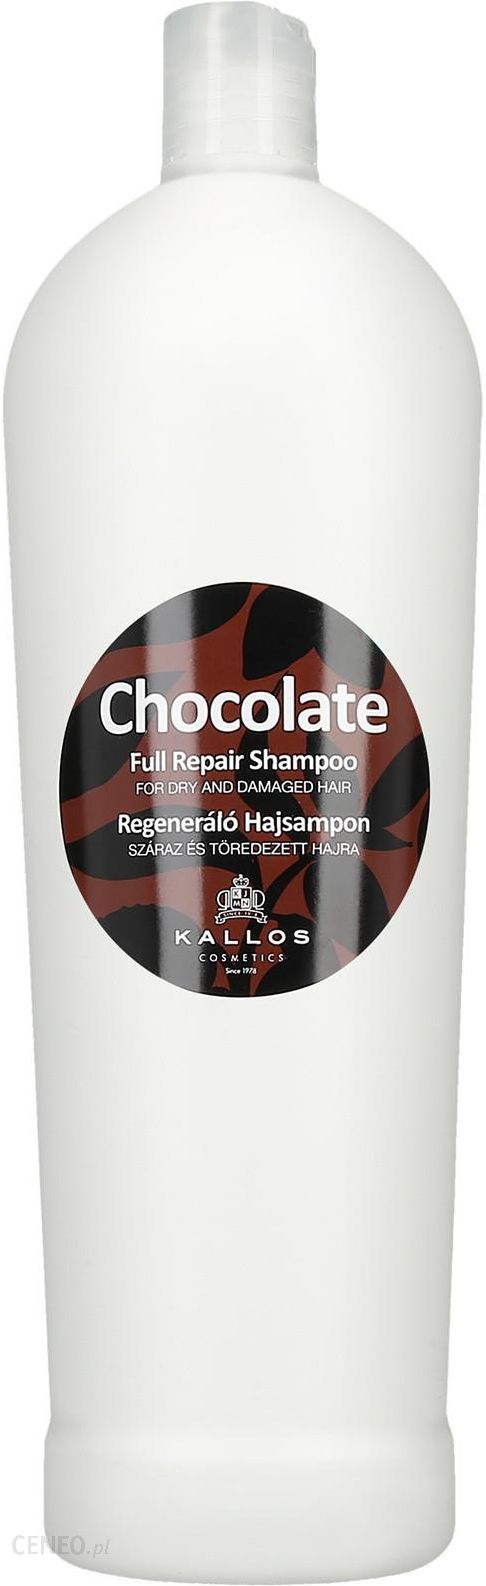 szampon czekoladowy kallos